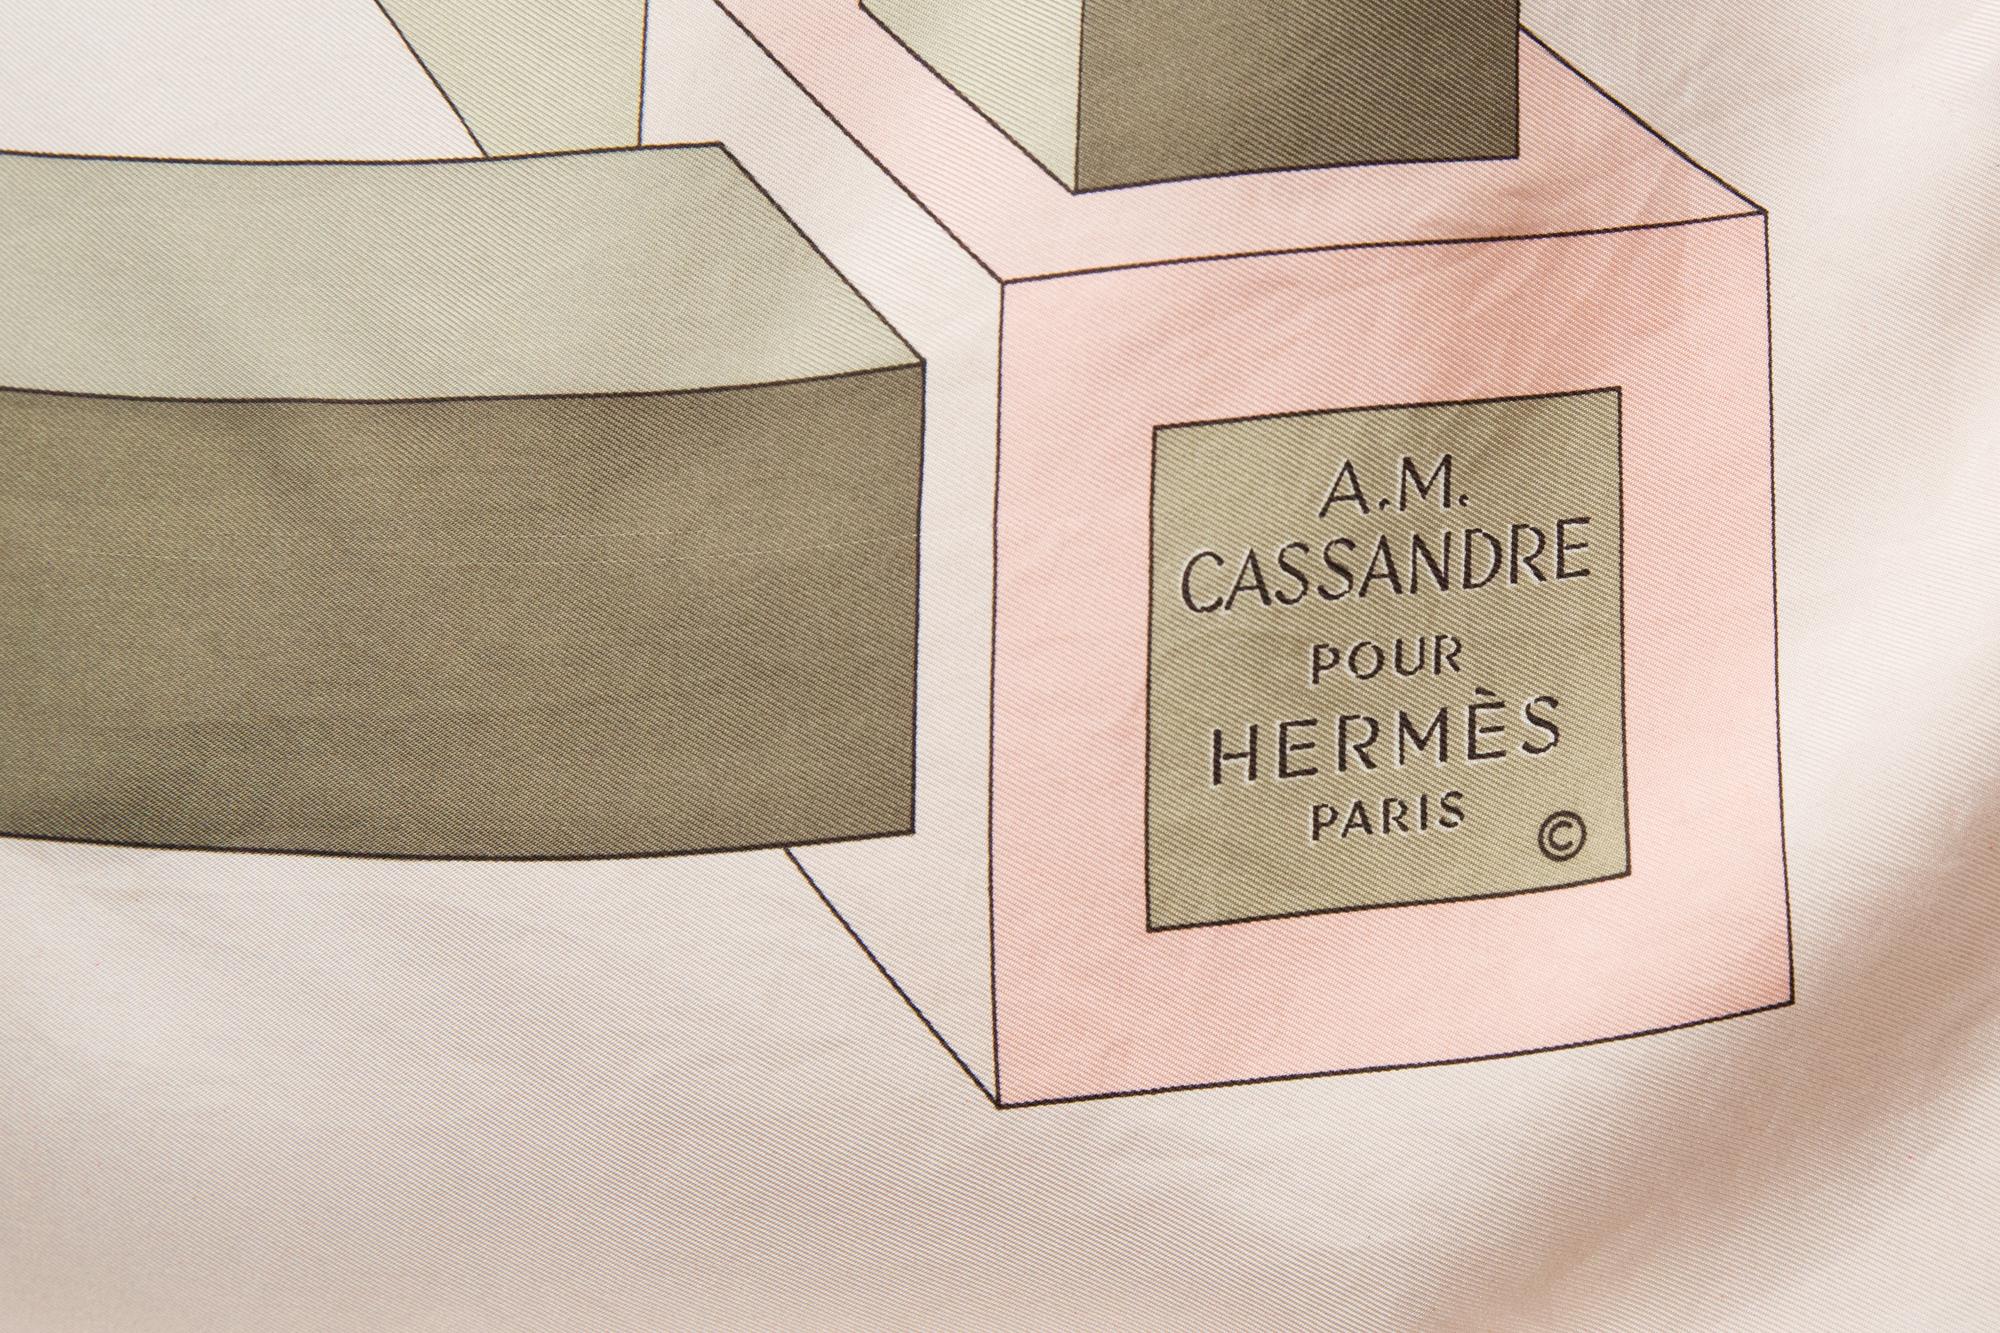 Hermes Pink Perspective by A.M.Cassandre pour Hermes Paris Silk Scarf 2